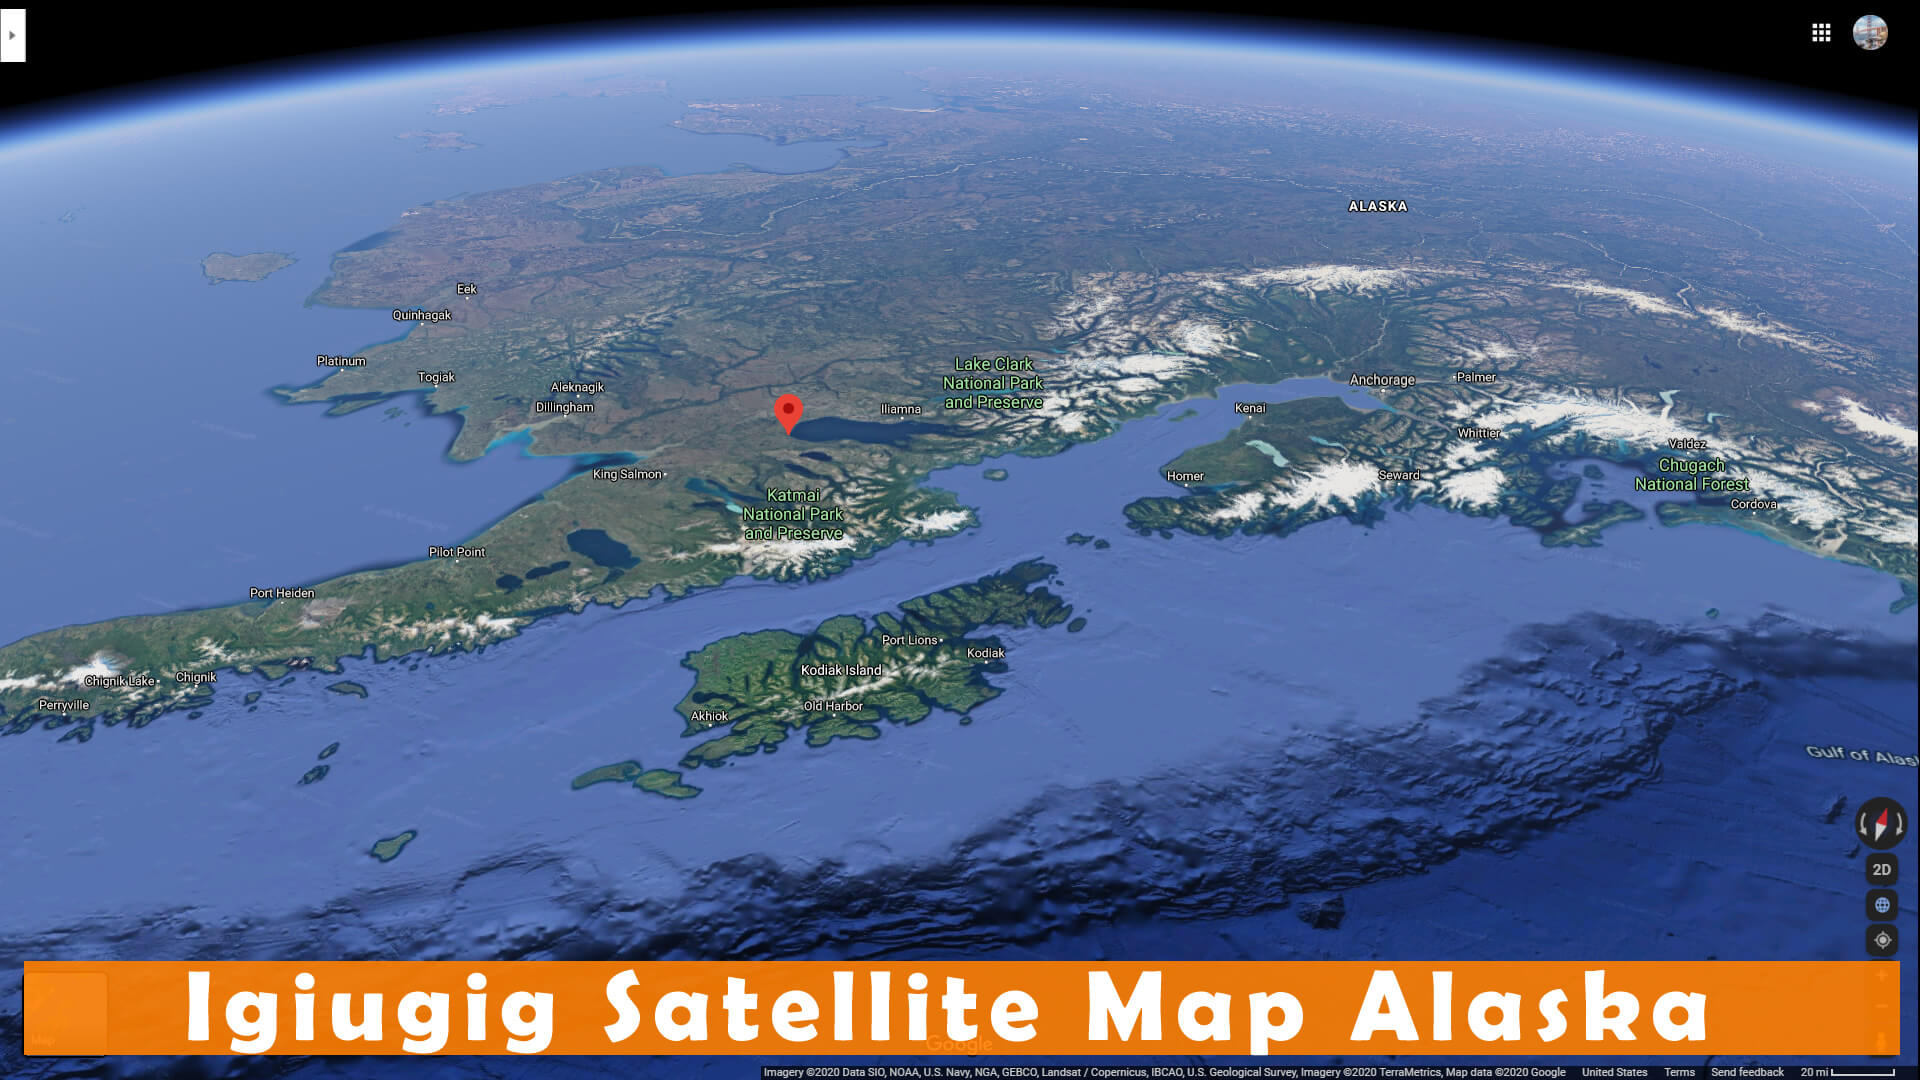 Igiugig Satellite Map Alaska